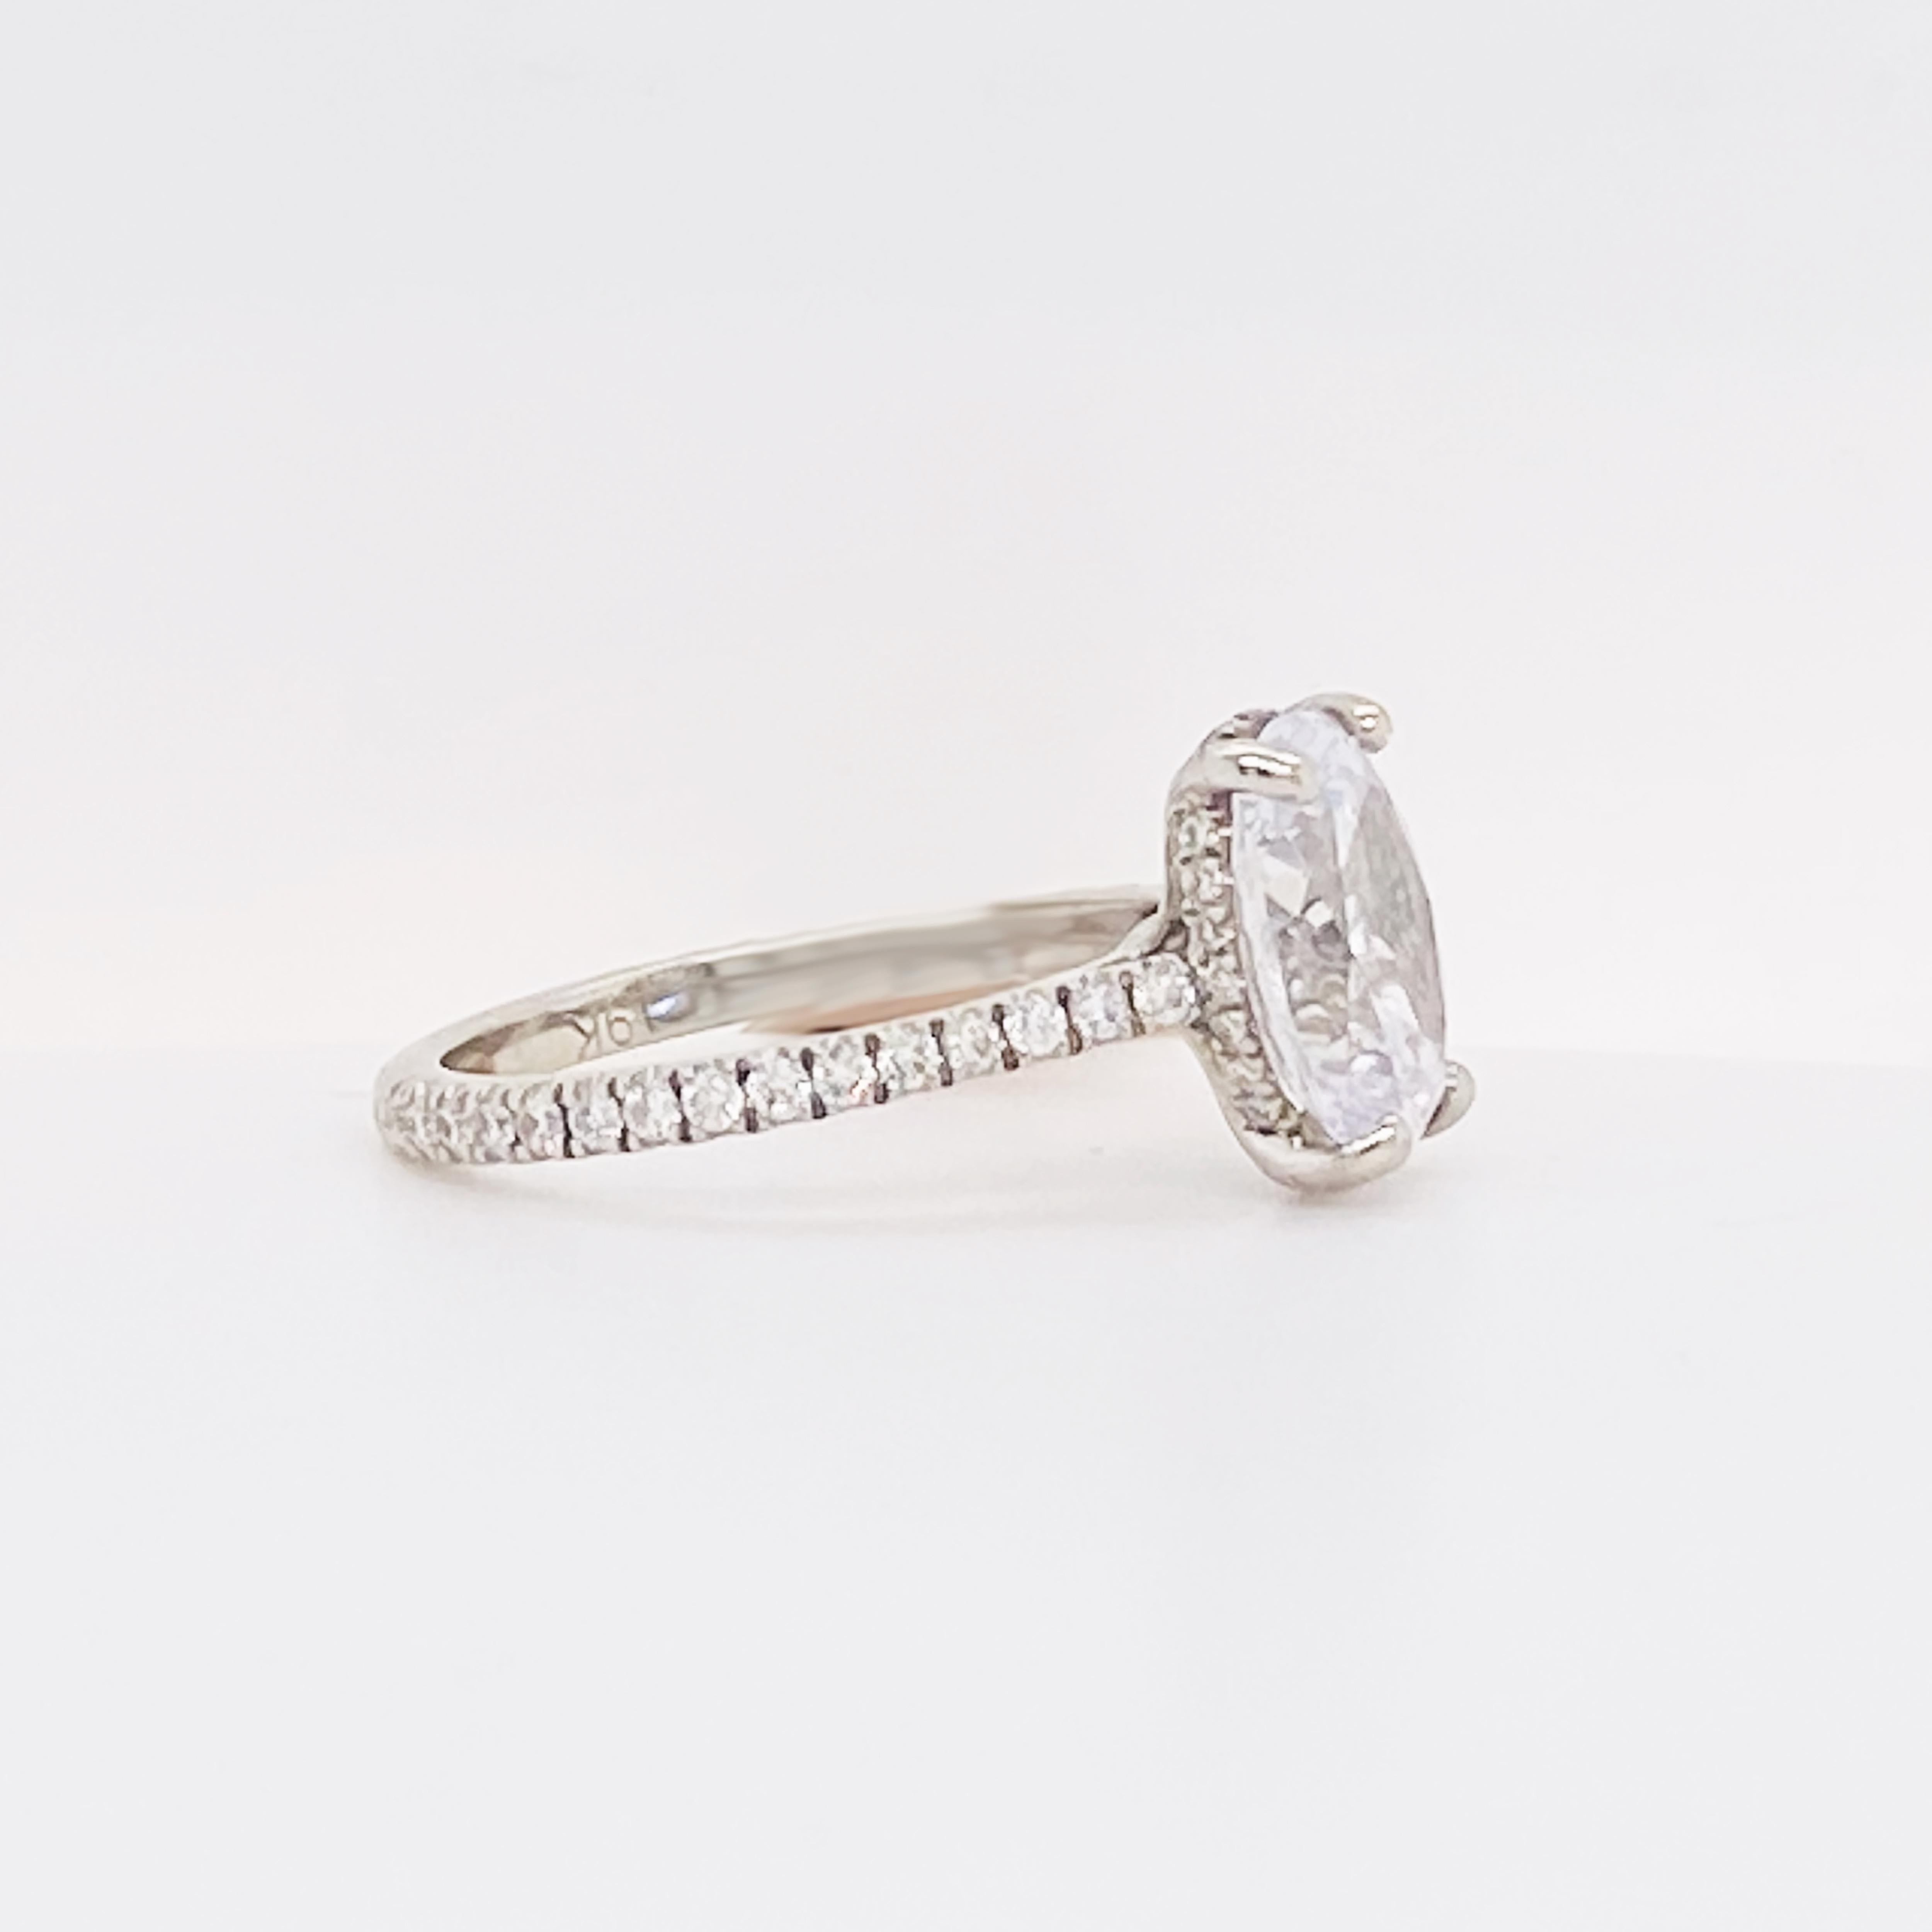 For Sale:  3.50 Carat Oval Diamond Engagement Ring Diamonds on Band 19 Karat Gold 5